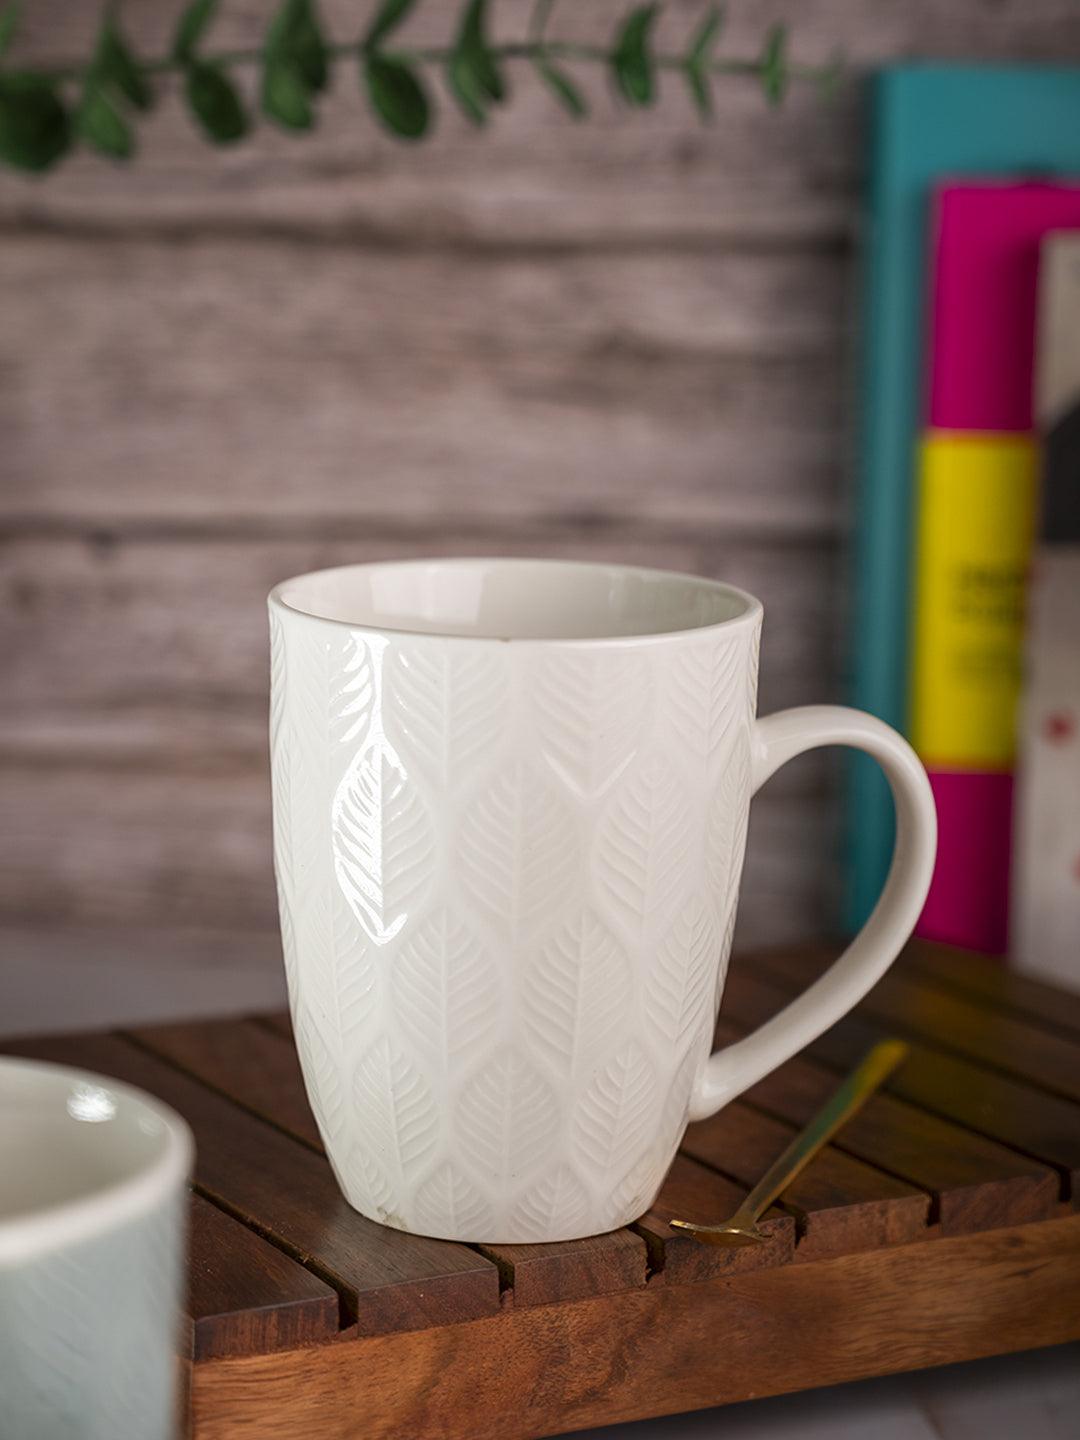 Ivory Ceramic Mug - 360Ml, Leaf Pattern - MARKET 99